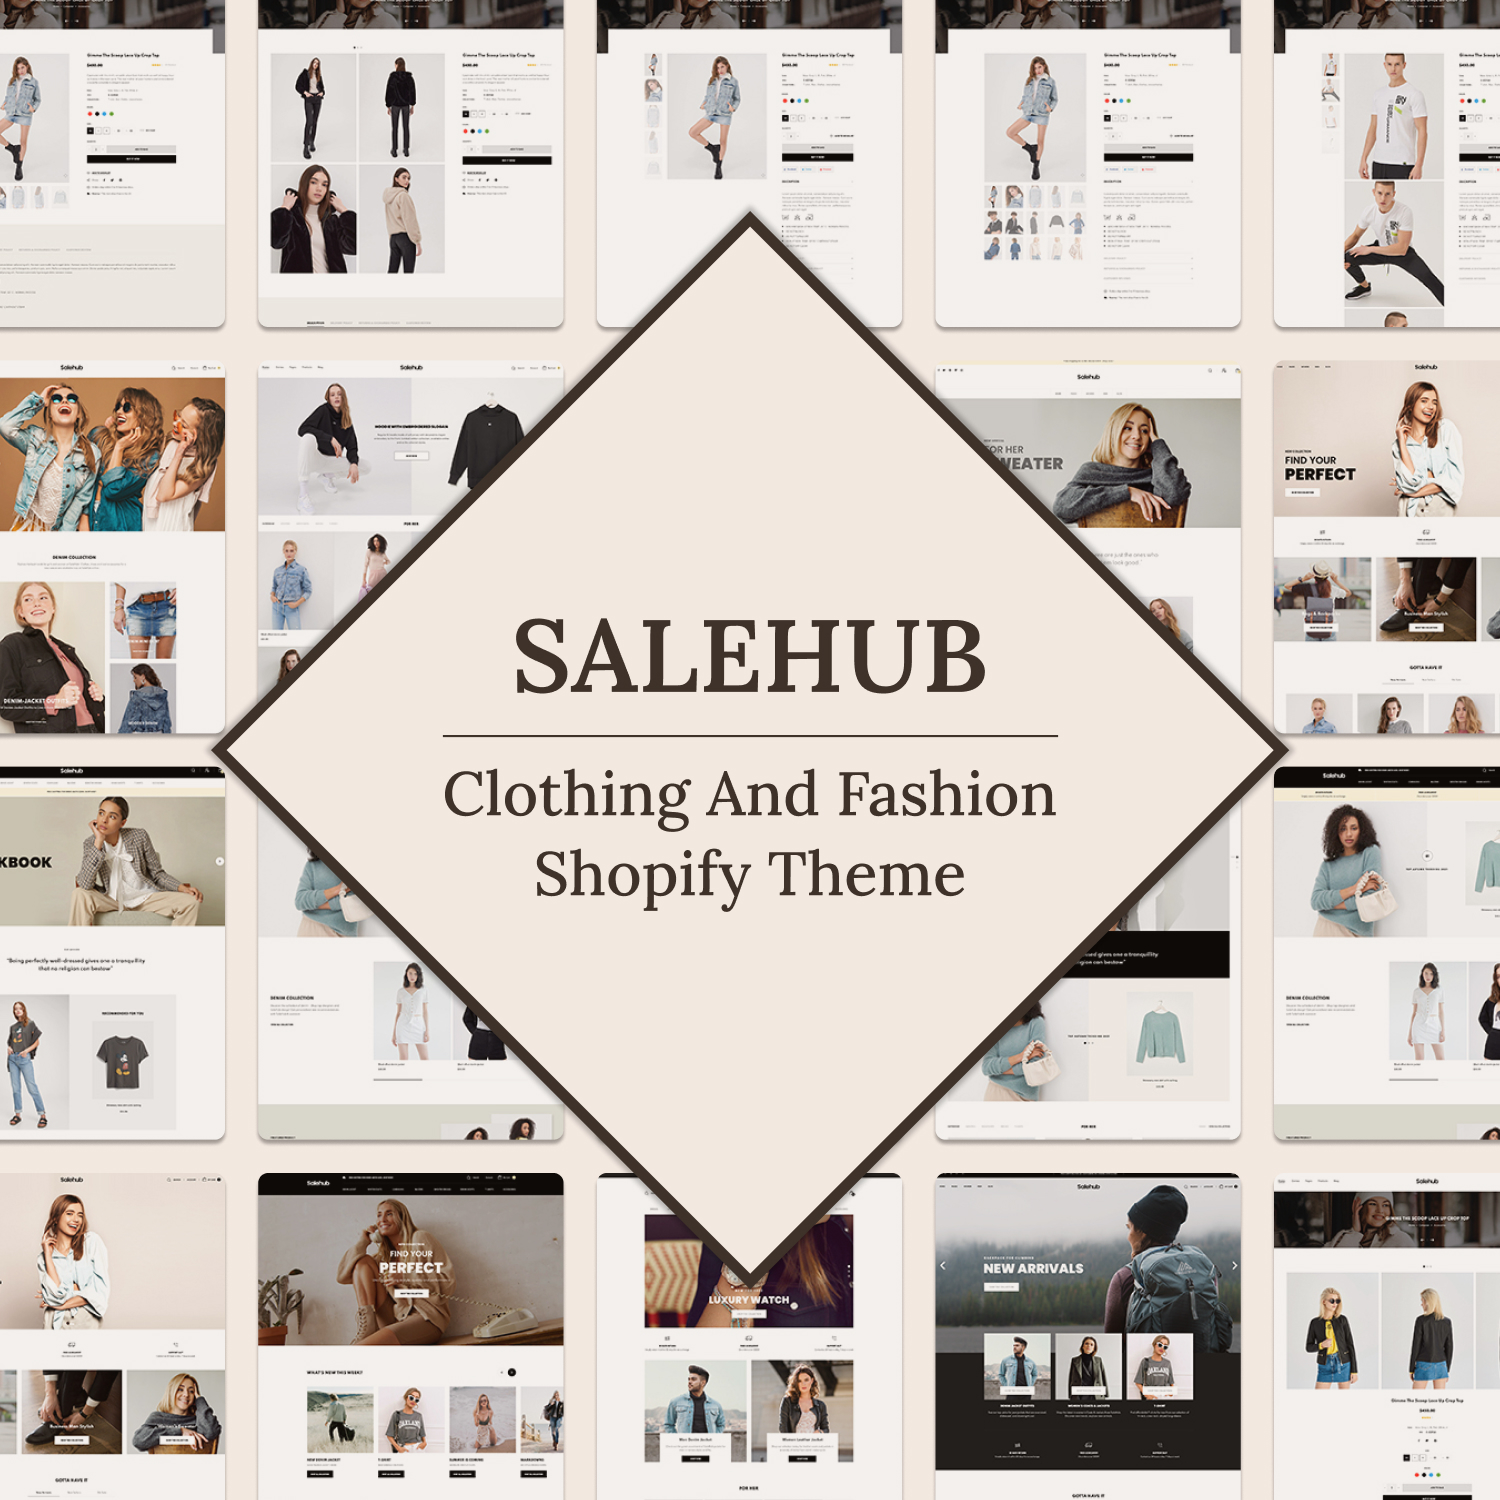 Preview salehub clothing and fashion shopify theme.